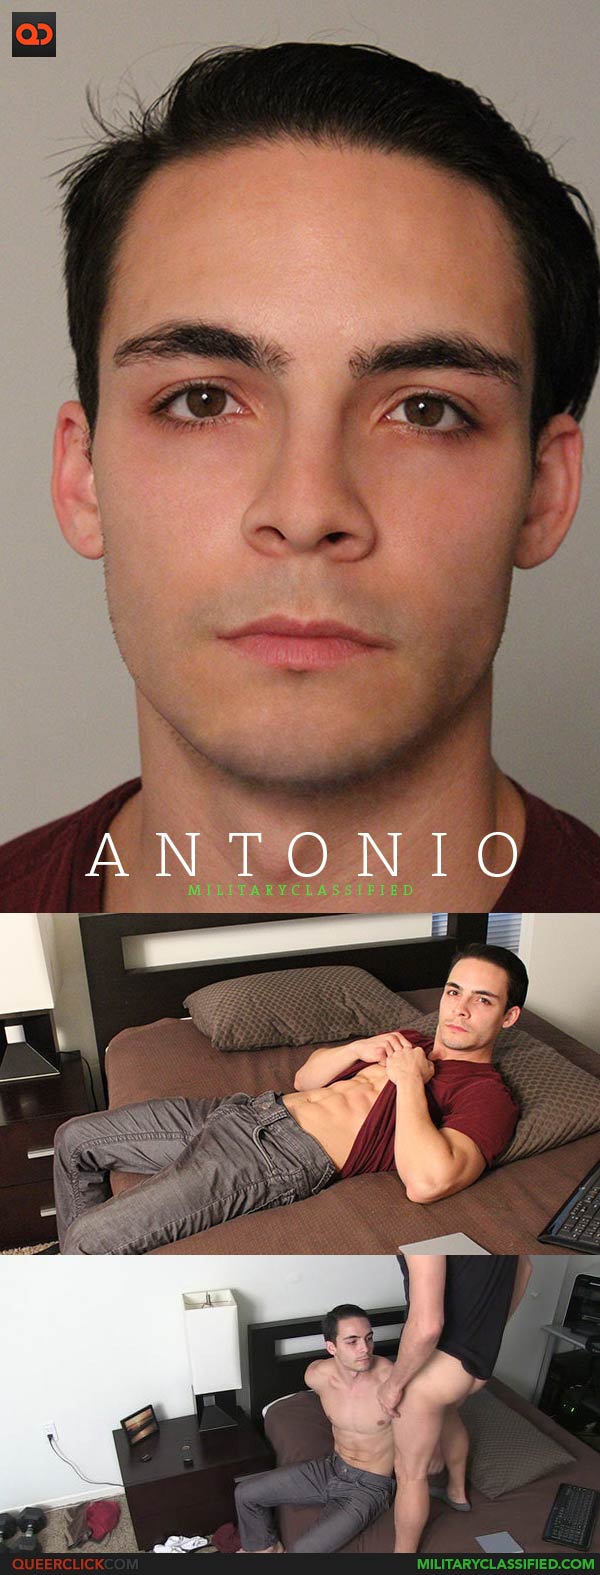 Military Classified: Antonio